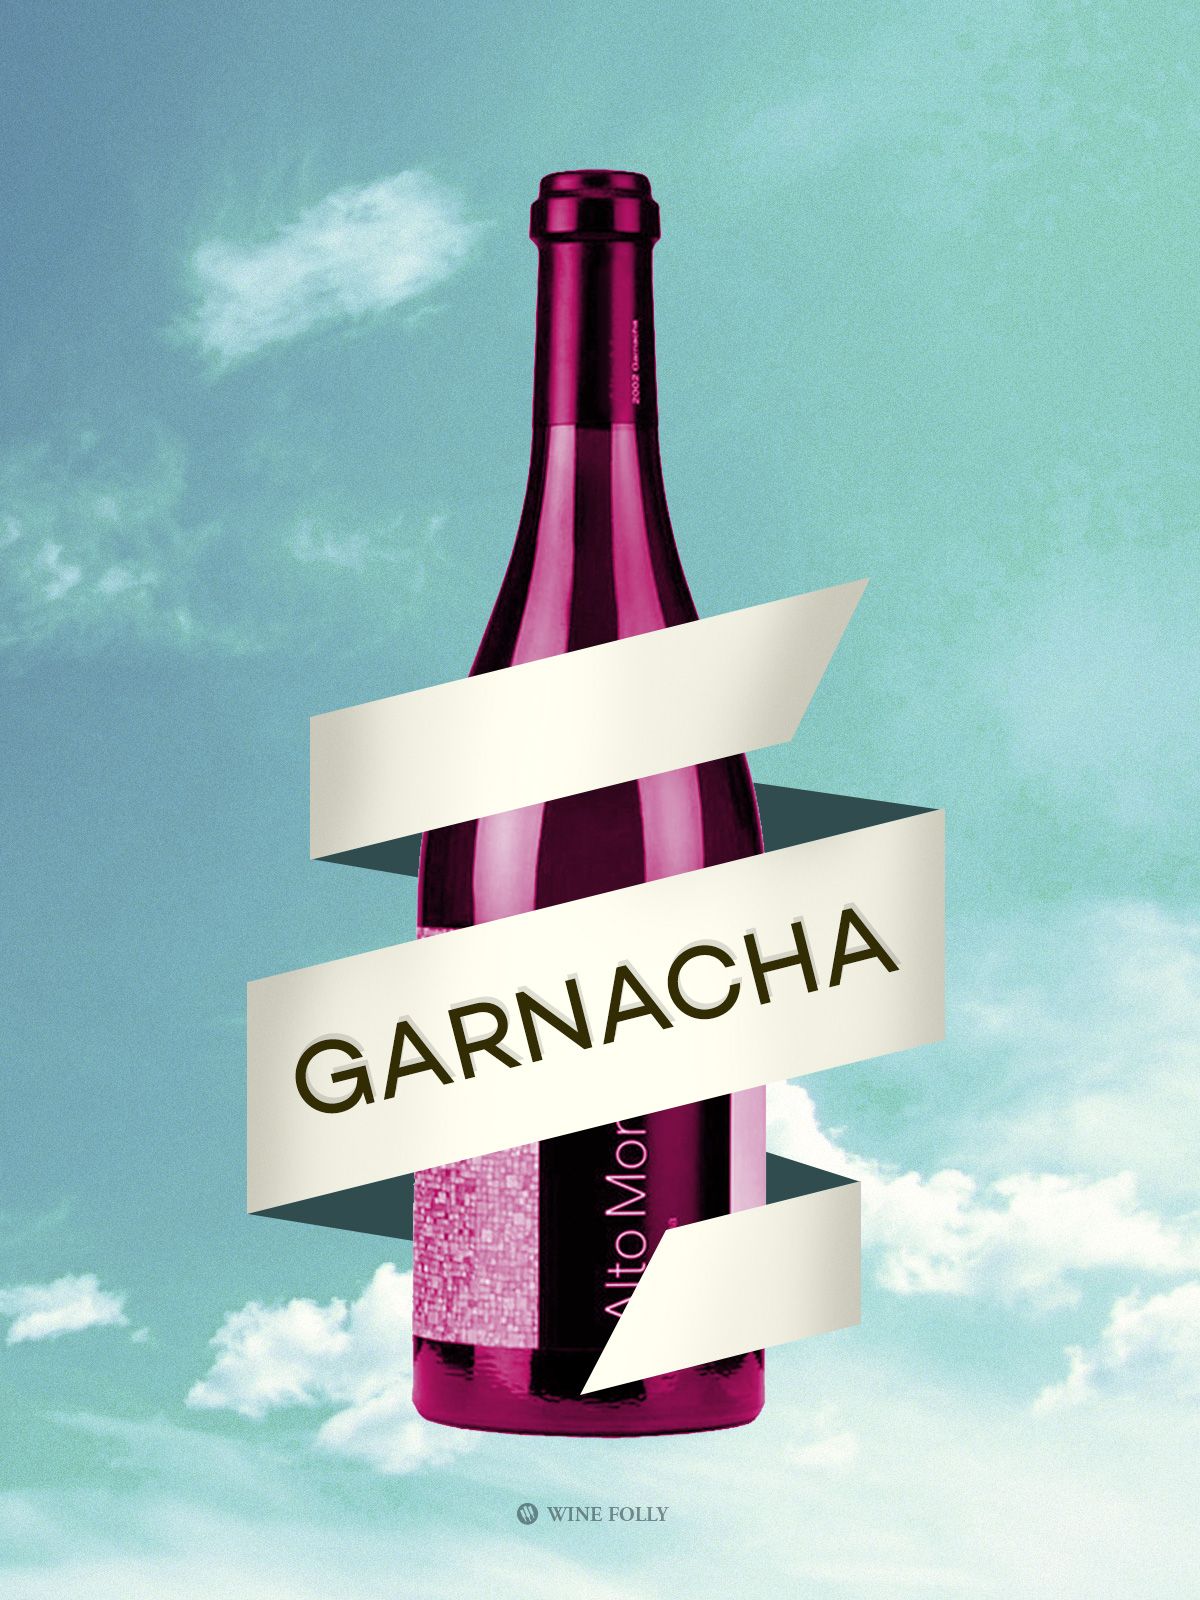 Garnacha illustrasjon av Wine Folly